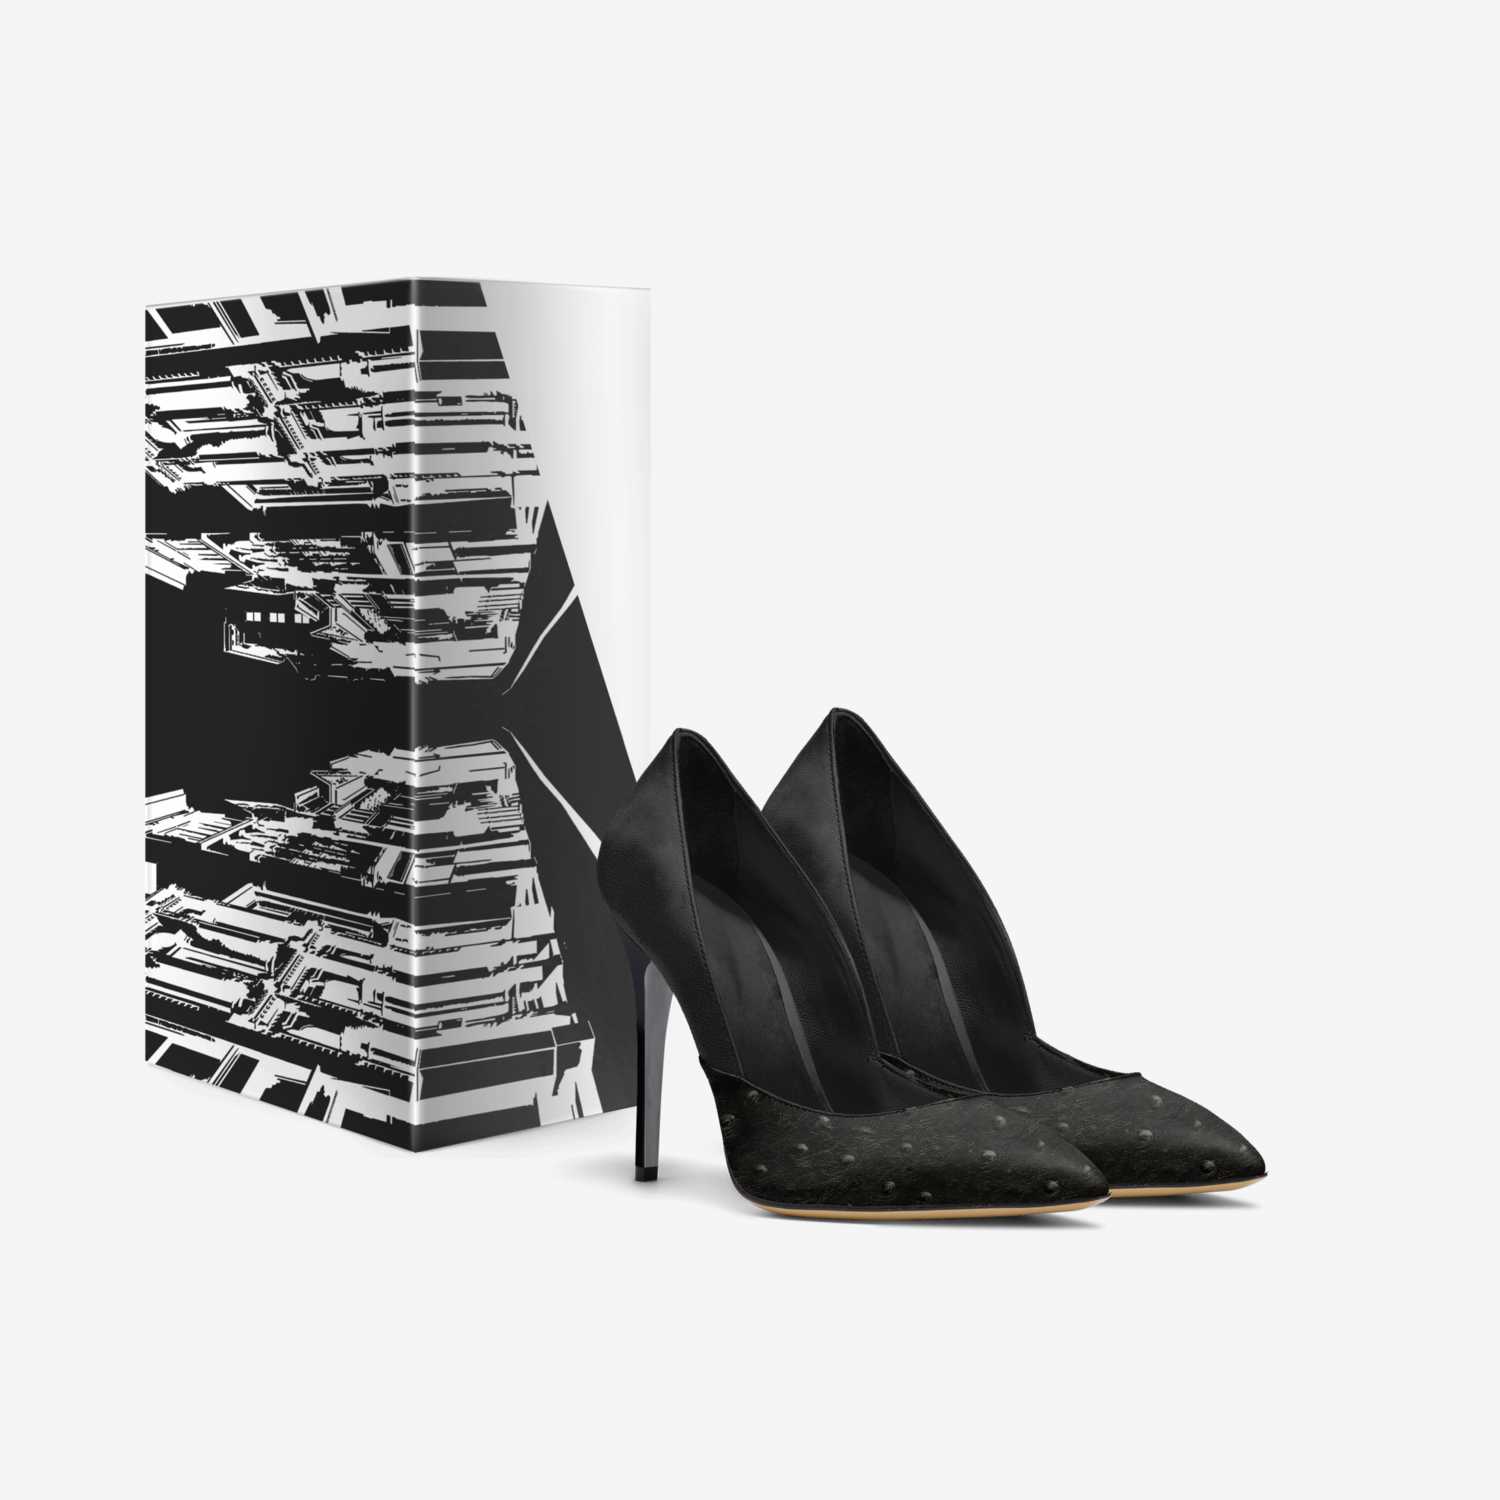 NaRea custom made in Italy shoes by Sophia Mari | Box view